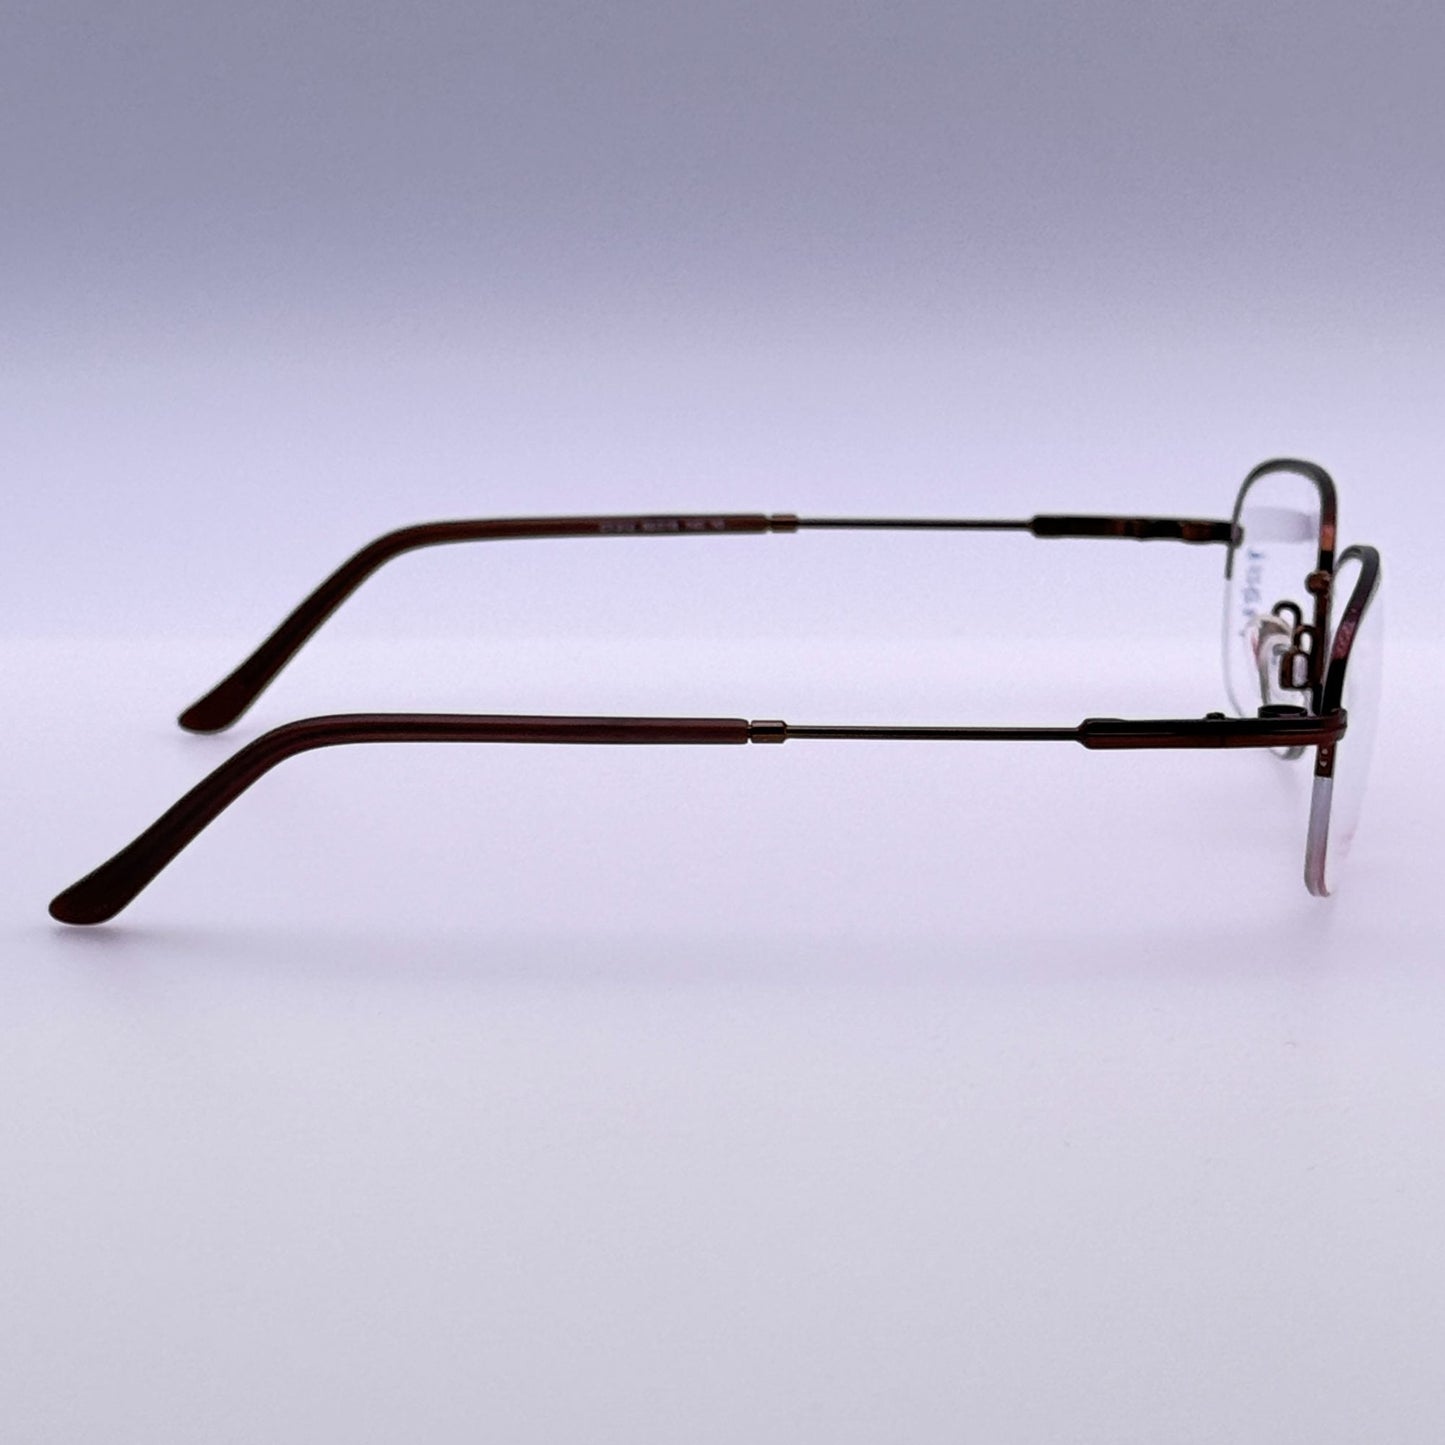 Easytwist Easy Twist Eyeglasses Eye Glasses Frames CT 212 10 55-18-140